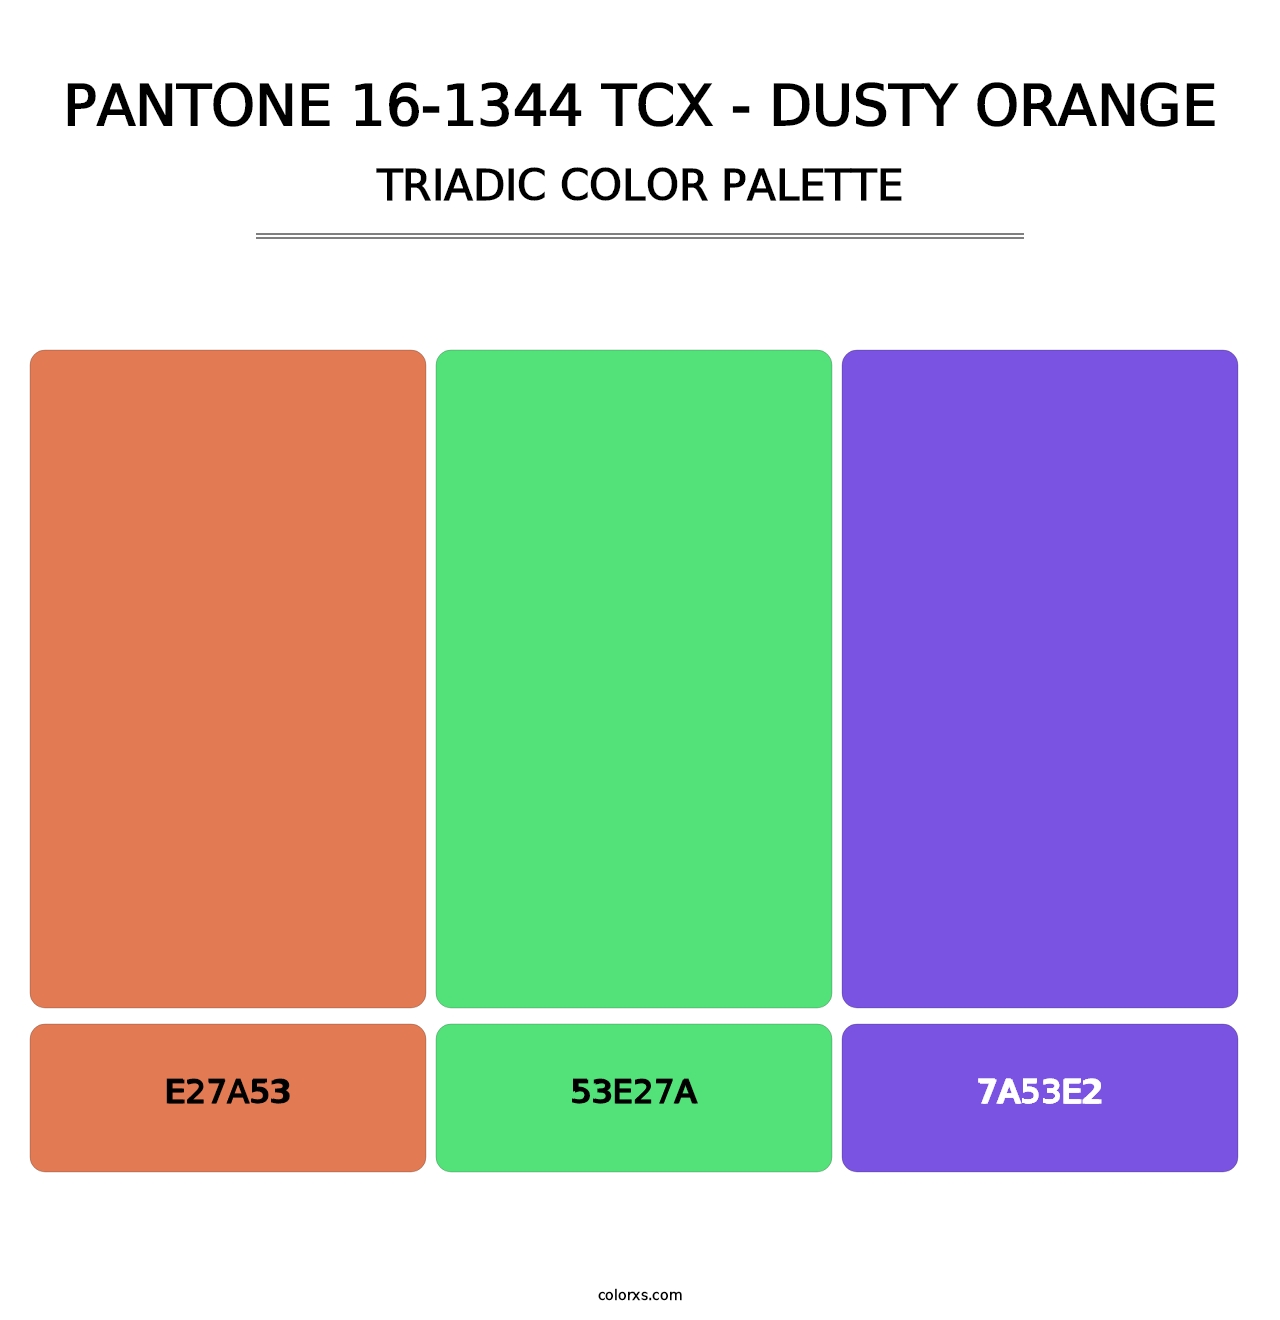 PANTONE 16-1344 TCX - Dusty Orange - Triadic Color Palette